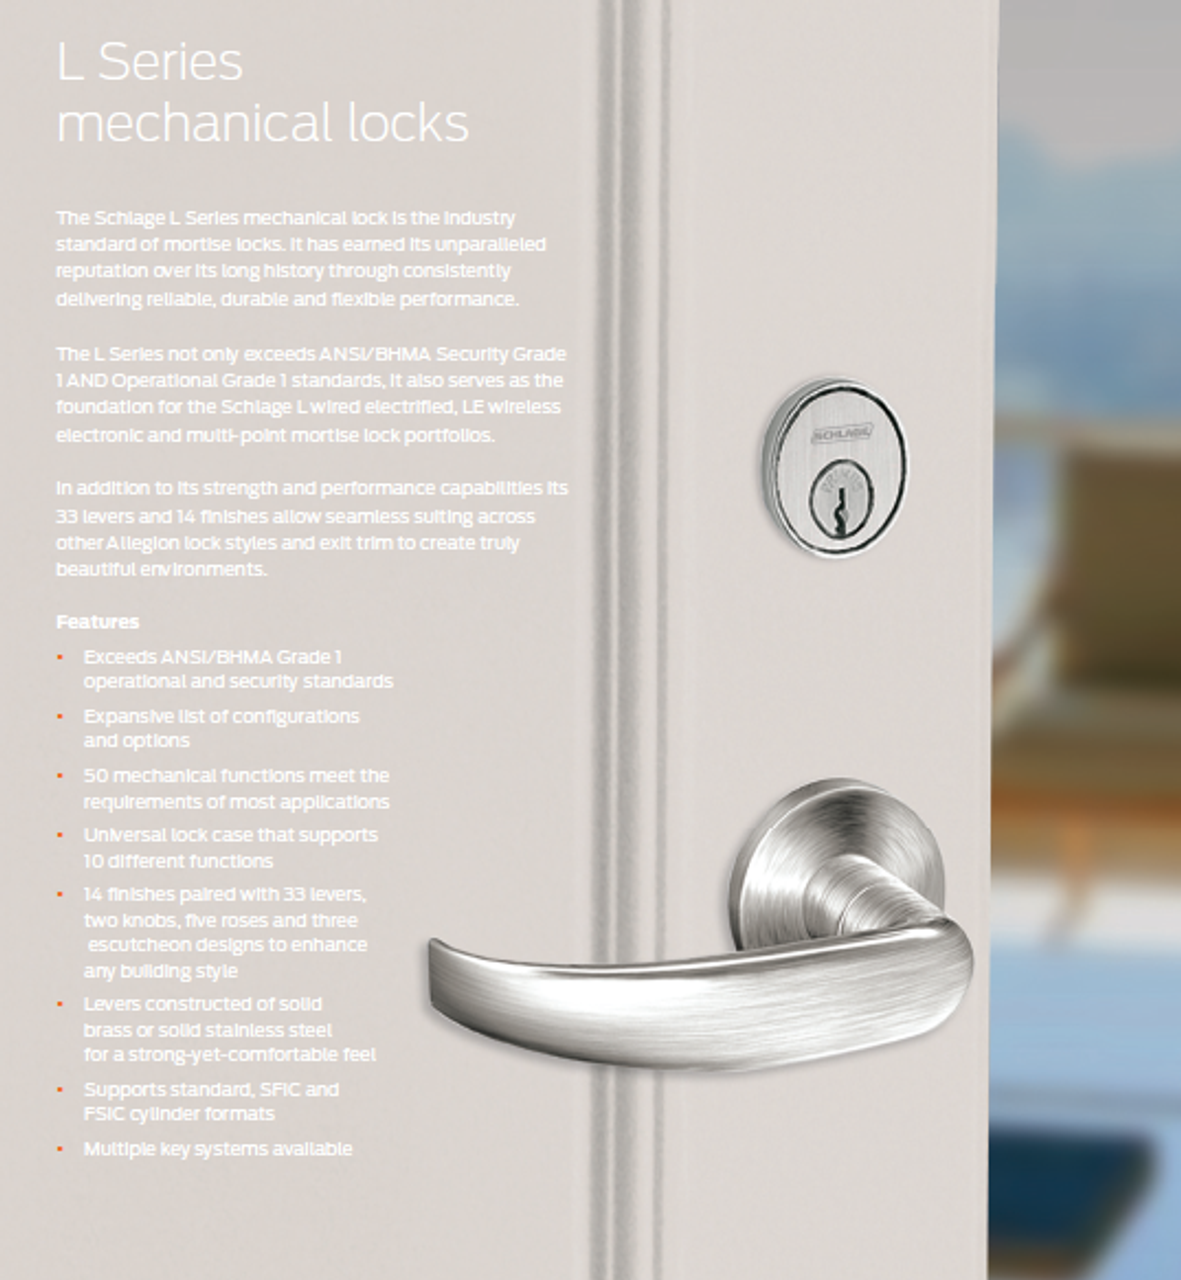 Schlage L9000 Series L9070LBLB Classroom Lock Case for Right Handed  1-3/4" Door